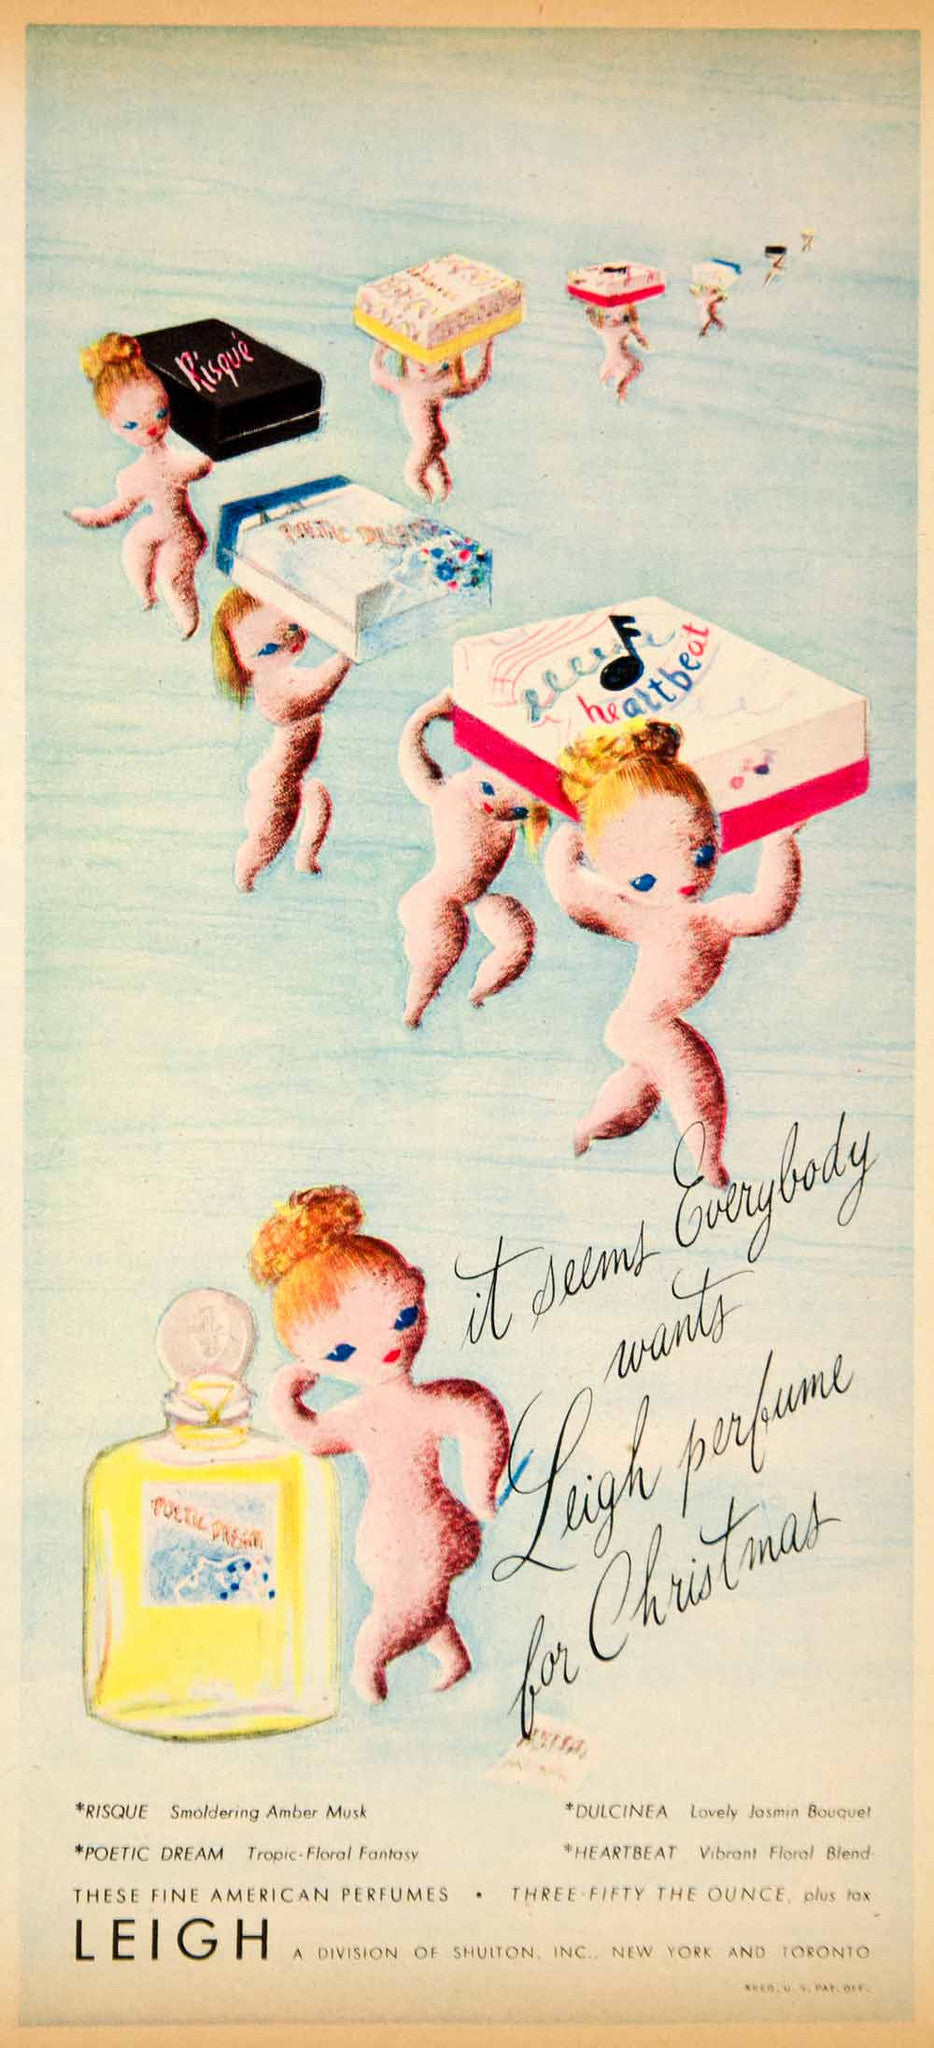 1945 Ad Vintage Leigh Perfume American Risque Poetic Dream Dulcinea YMS2 - Period Paper
